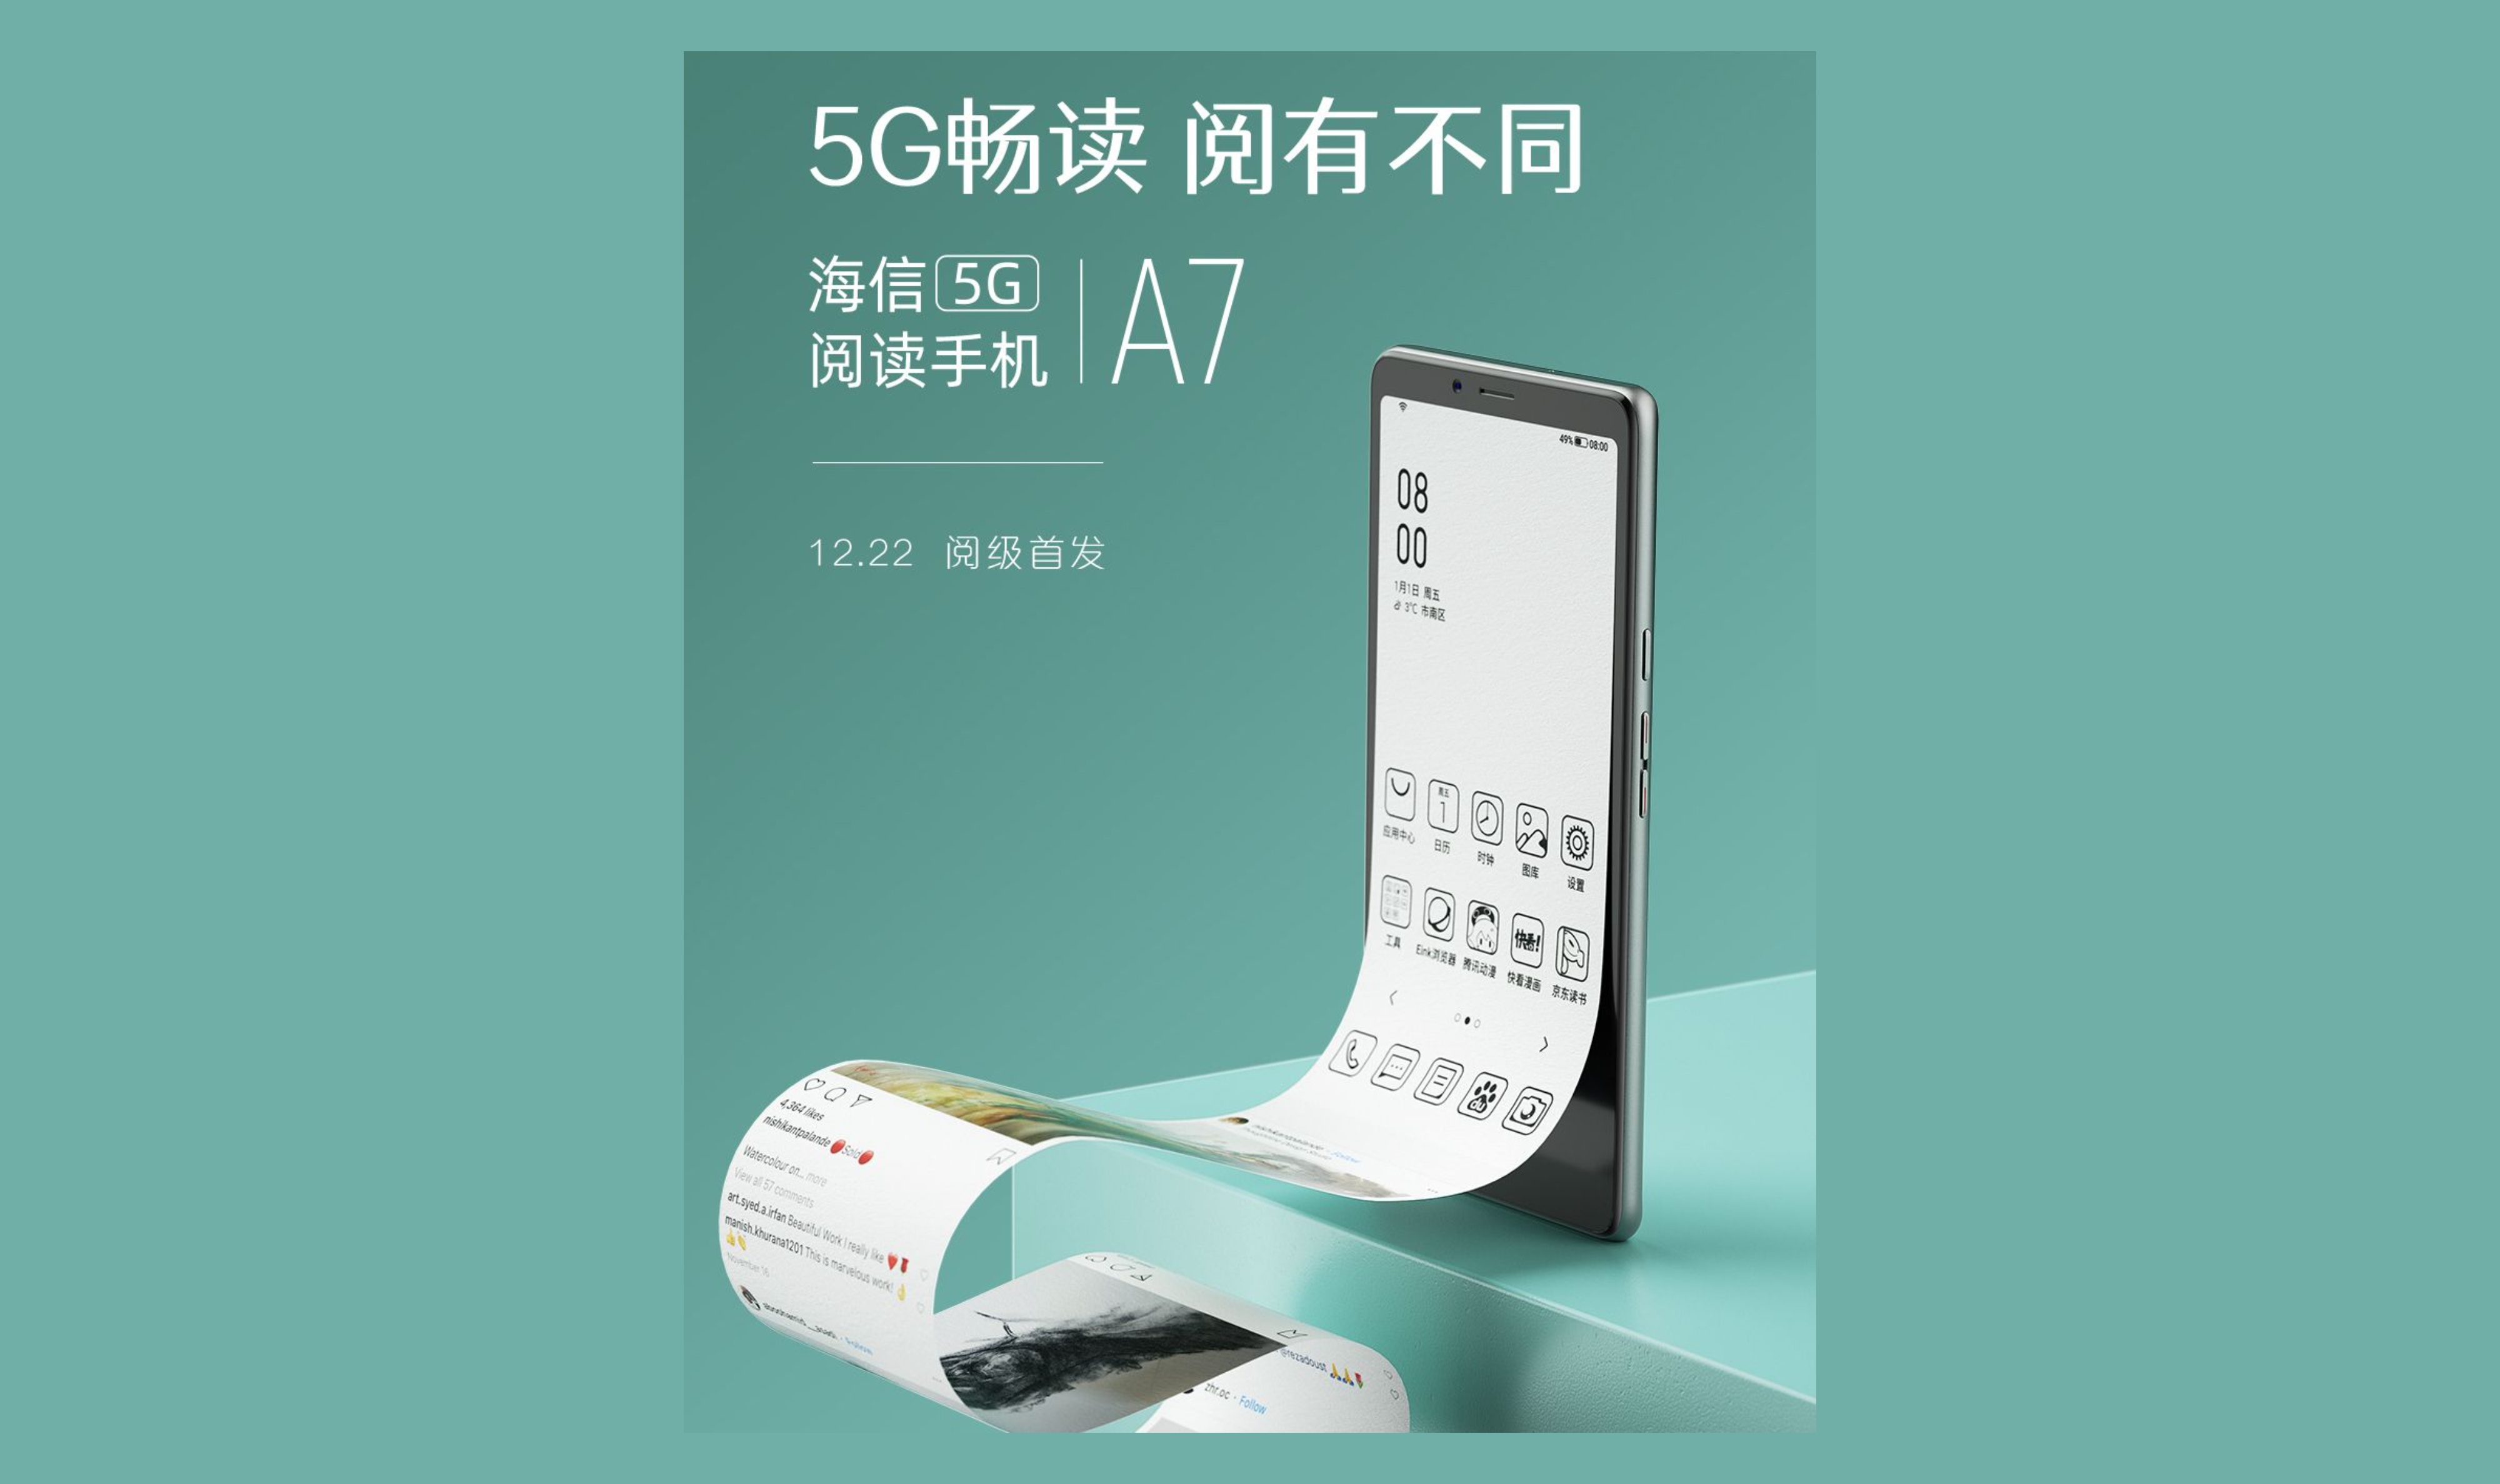 Hisense A7 5G Featured